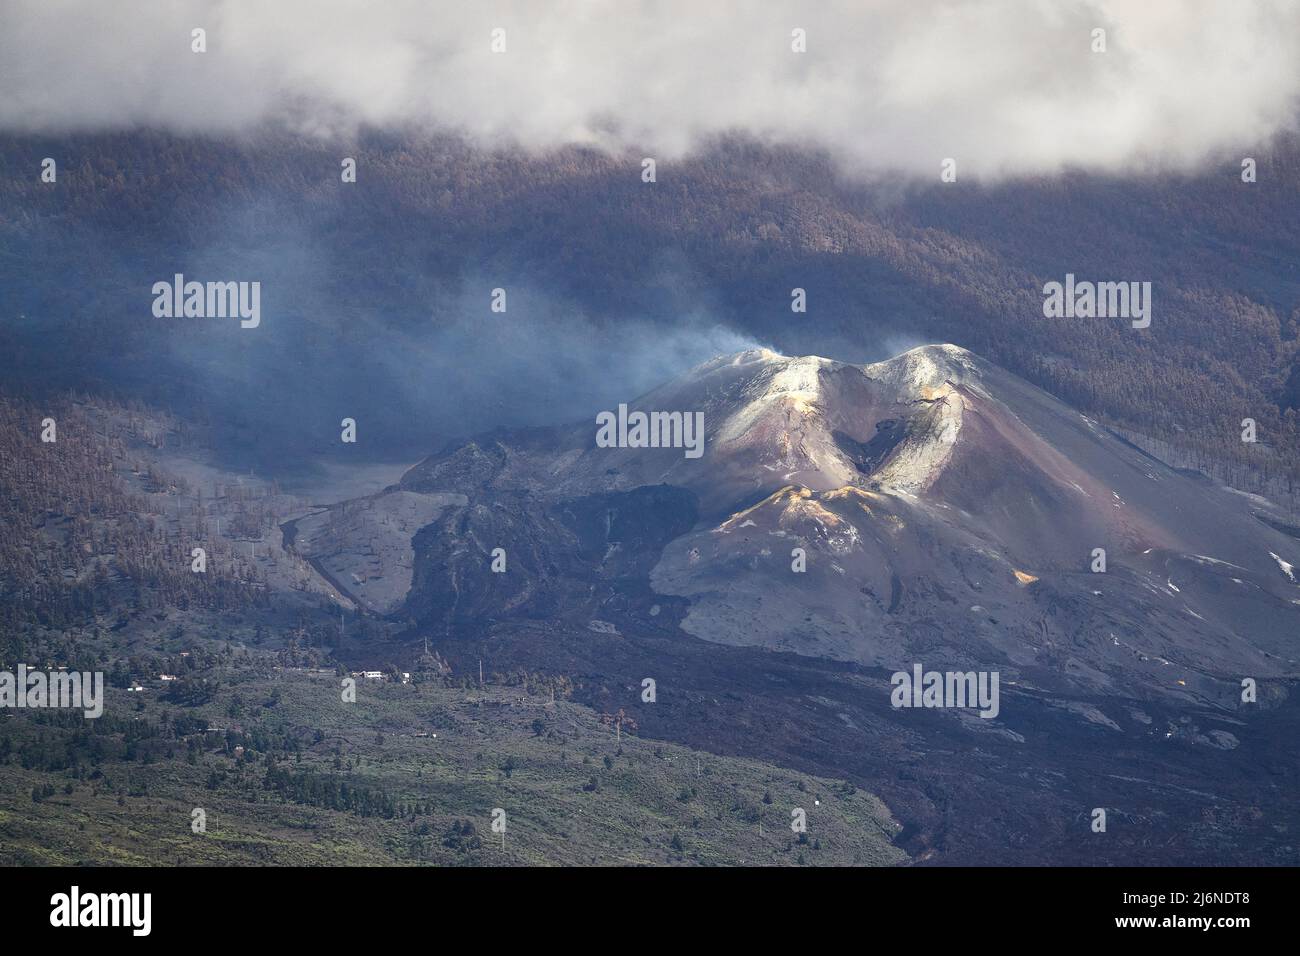 Sunbeam Illuminates Smoking Nameless Volcanic Crater. Sulfur Deposits And Black Magma Flows. El Paso La Palma Canary Islands Spain Stock Photo